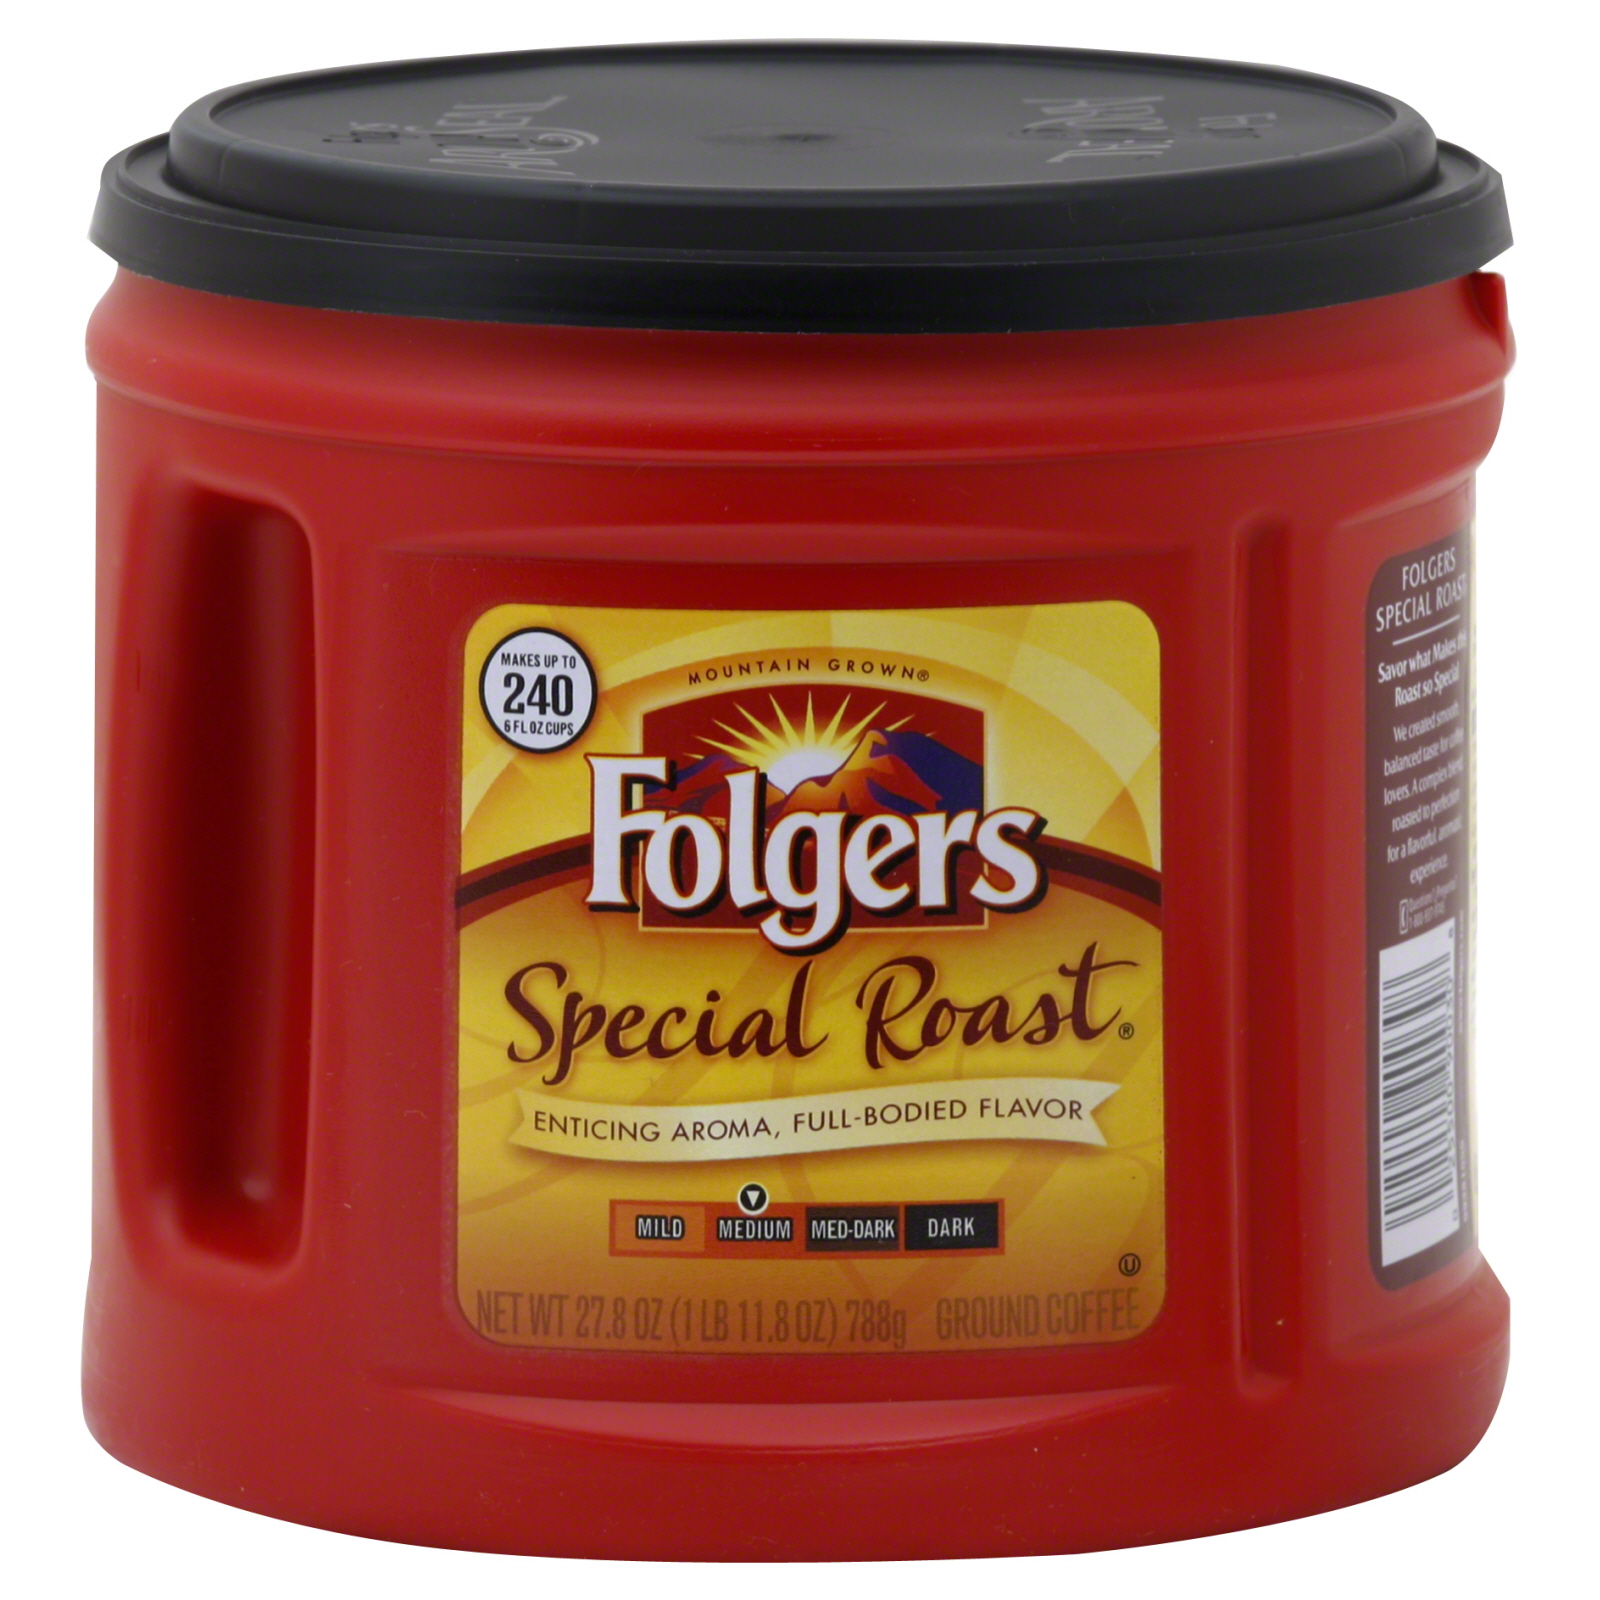 Folgers Special Roast Coffee, Ground, Medium 27.8 oz (1 lb 11.8 oz) 788 g